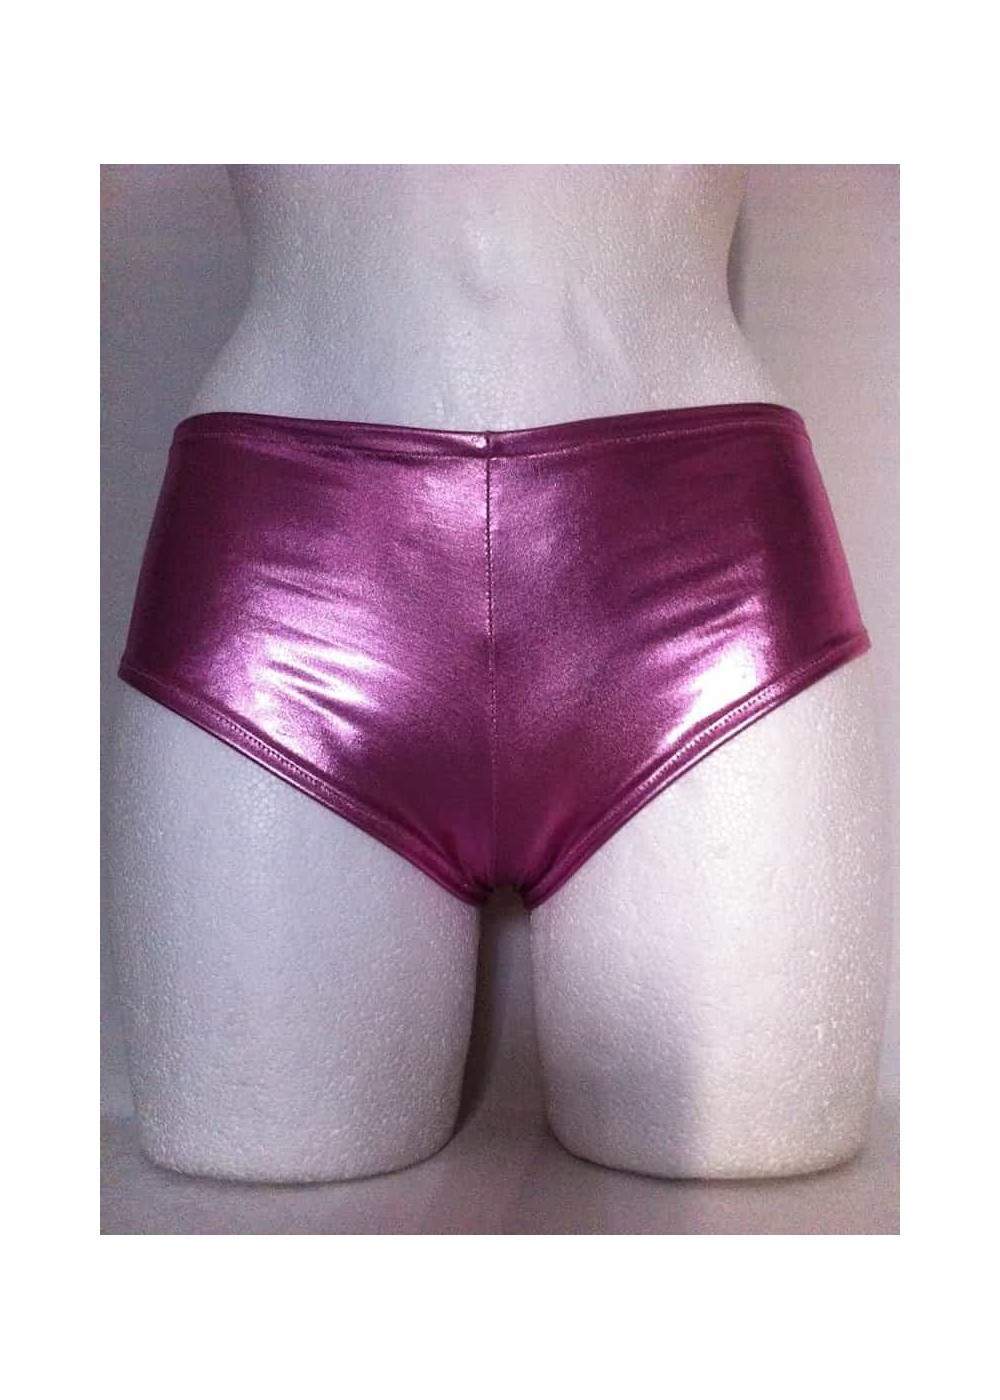 Leather-look hotpants pink metallic sizes 34 - 42 - 